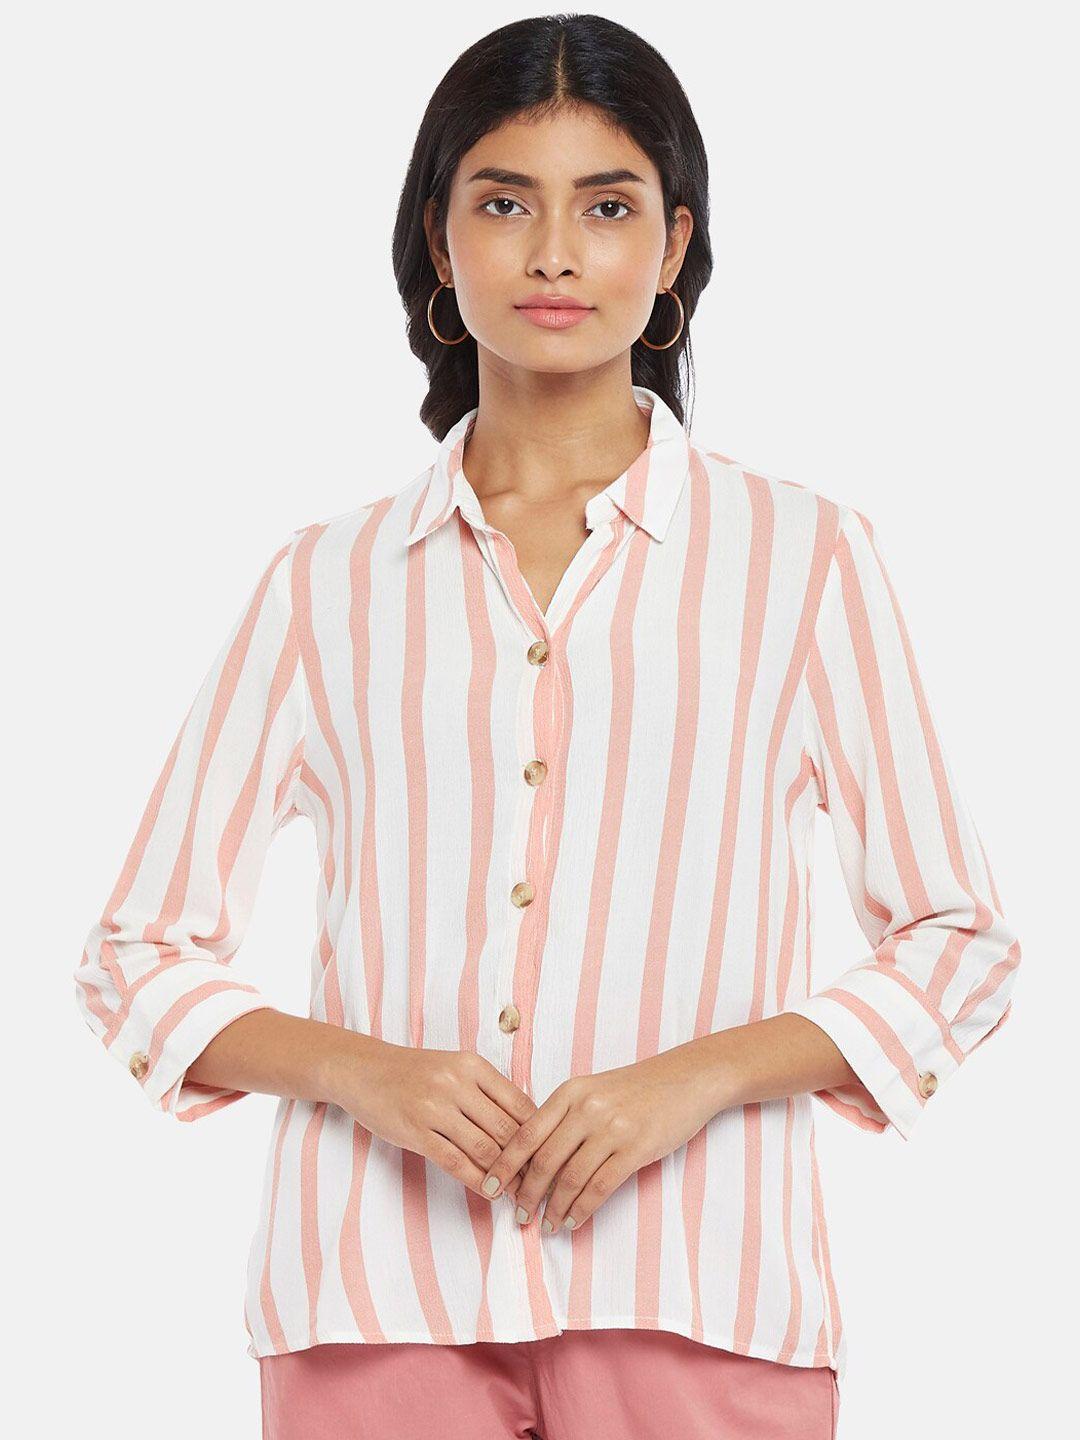 honey by pantaloons women peach & white striped shirt style top